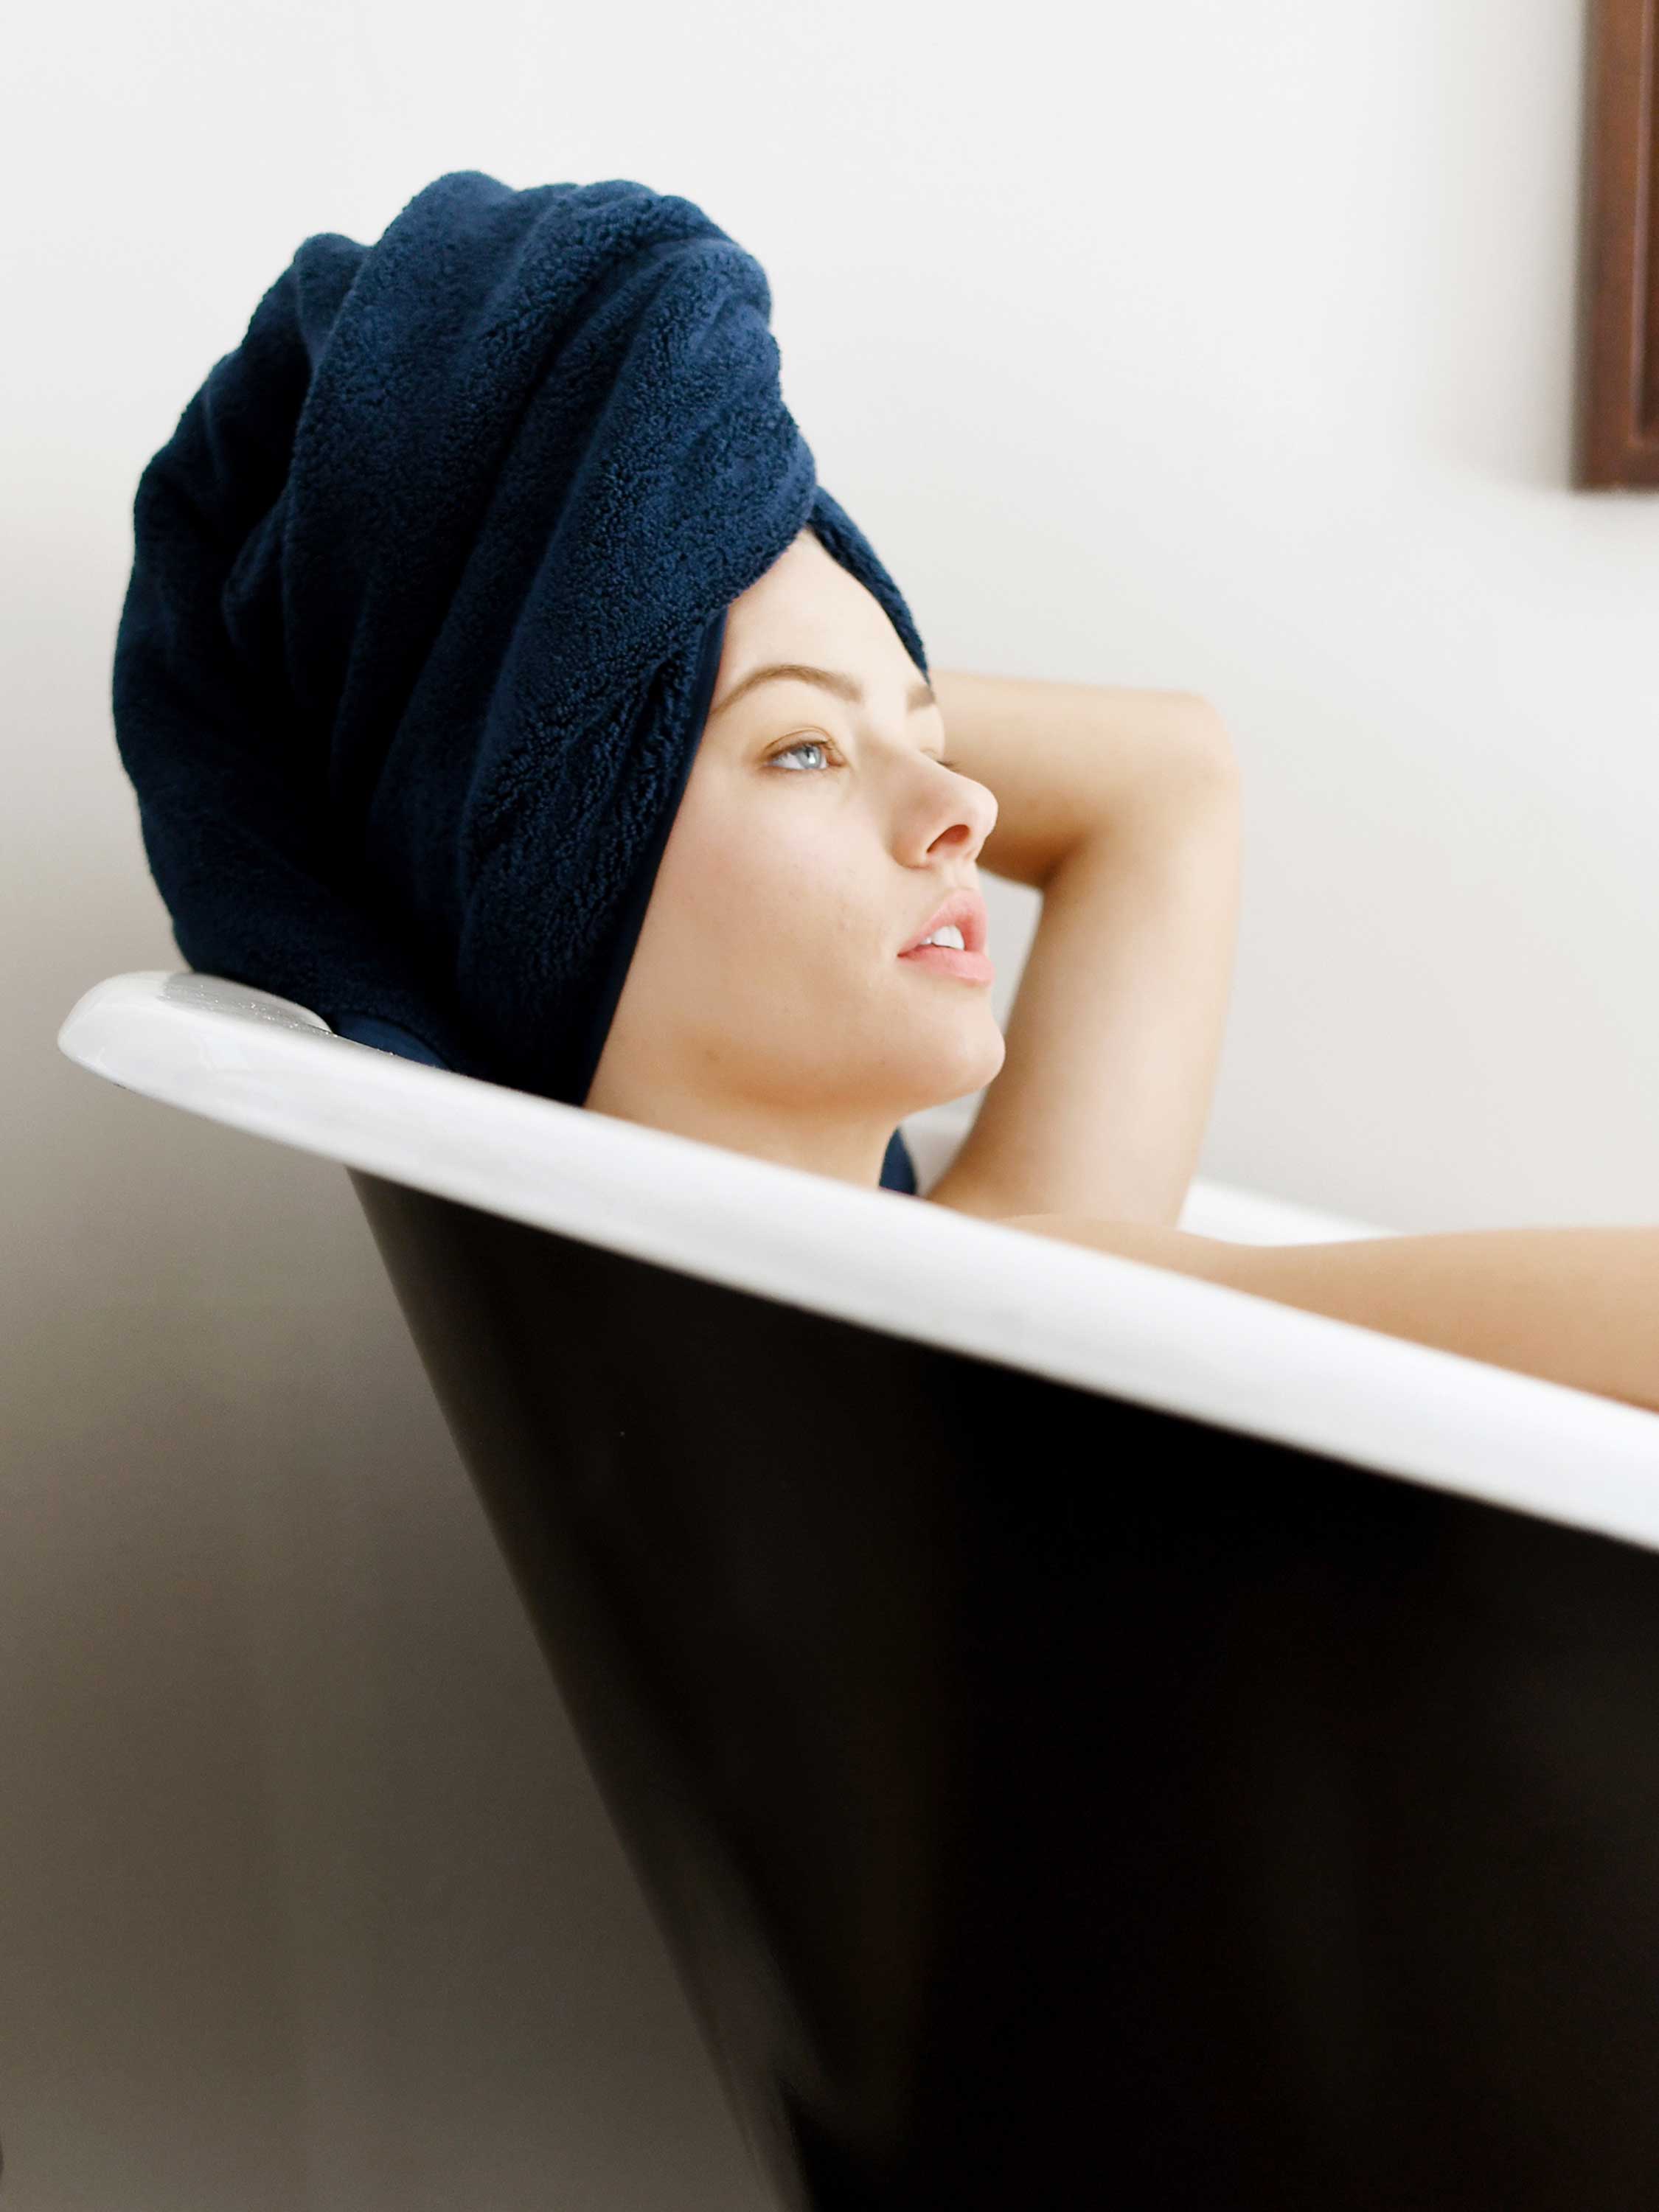 Classic Plush Bath Towel Set - Timeless Elegance for Your Bathroom